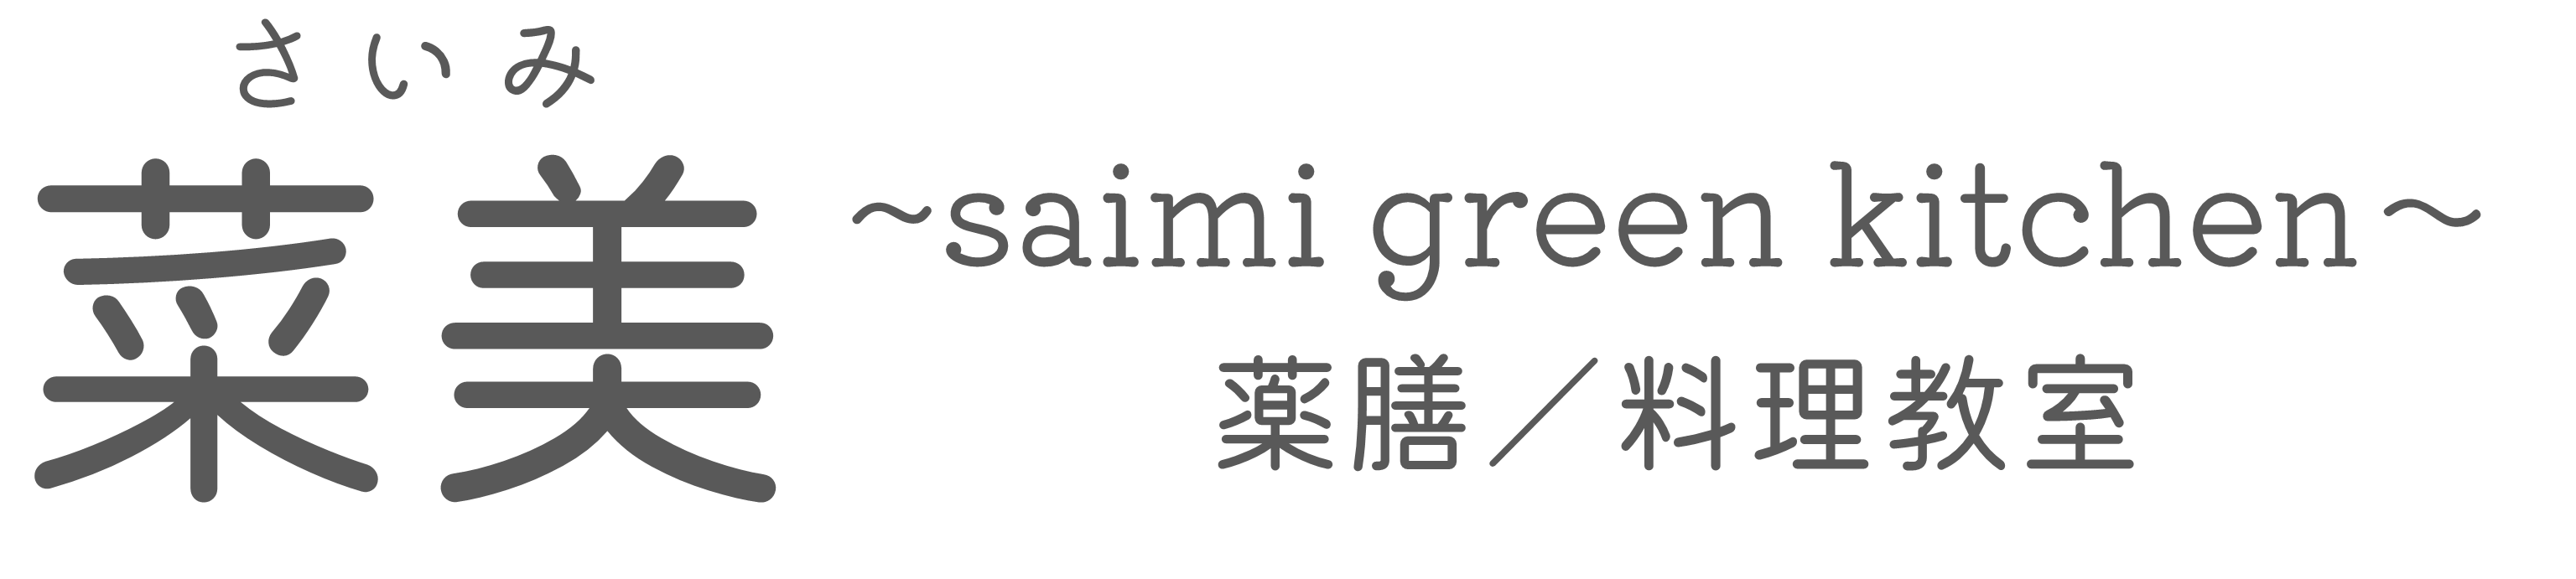 菜美～saimi green kitchen~薬膳/料理教室